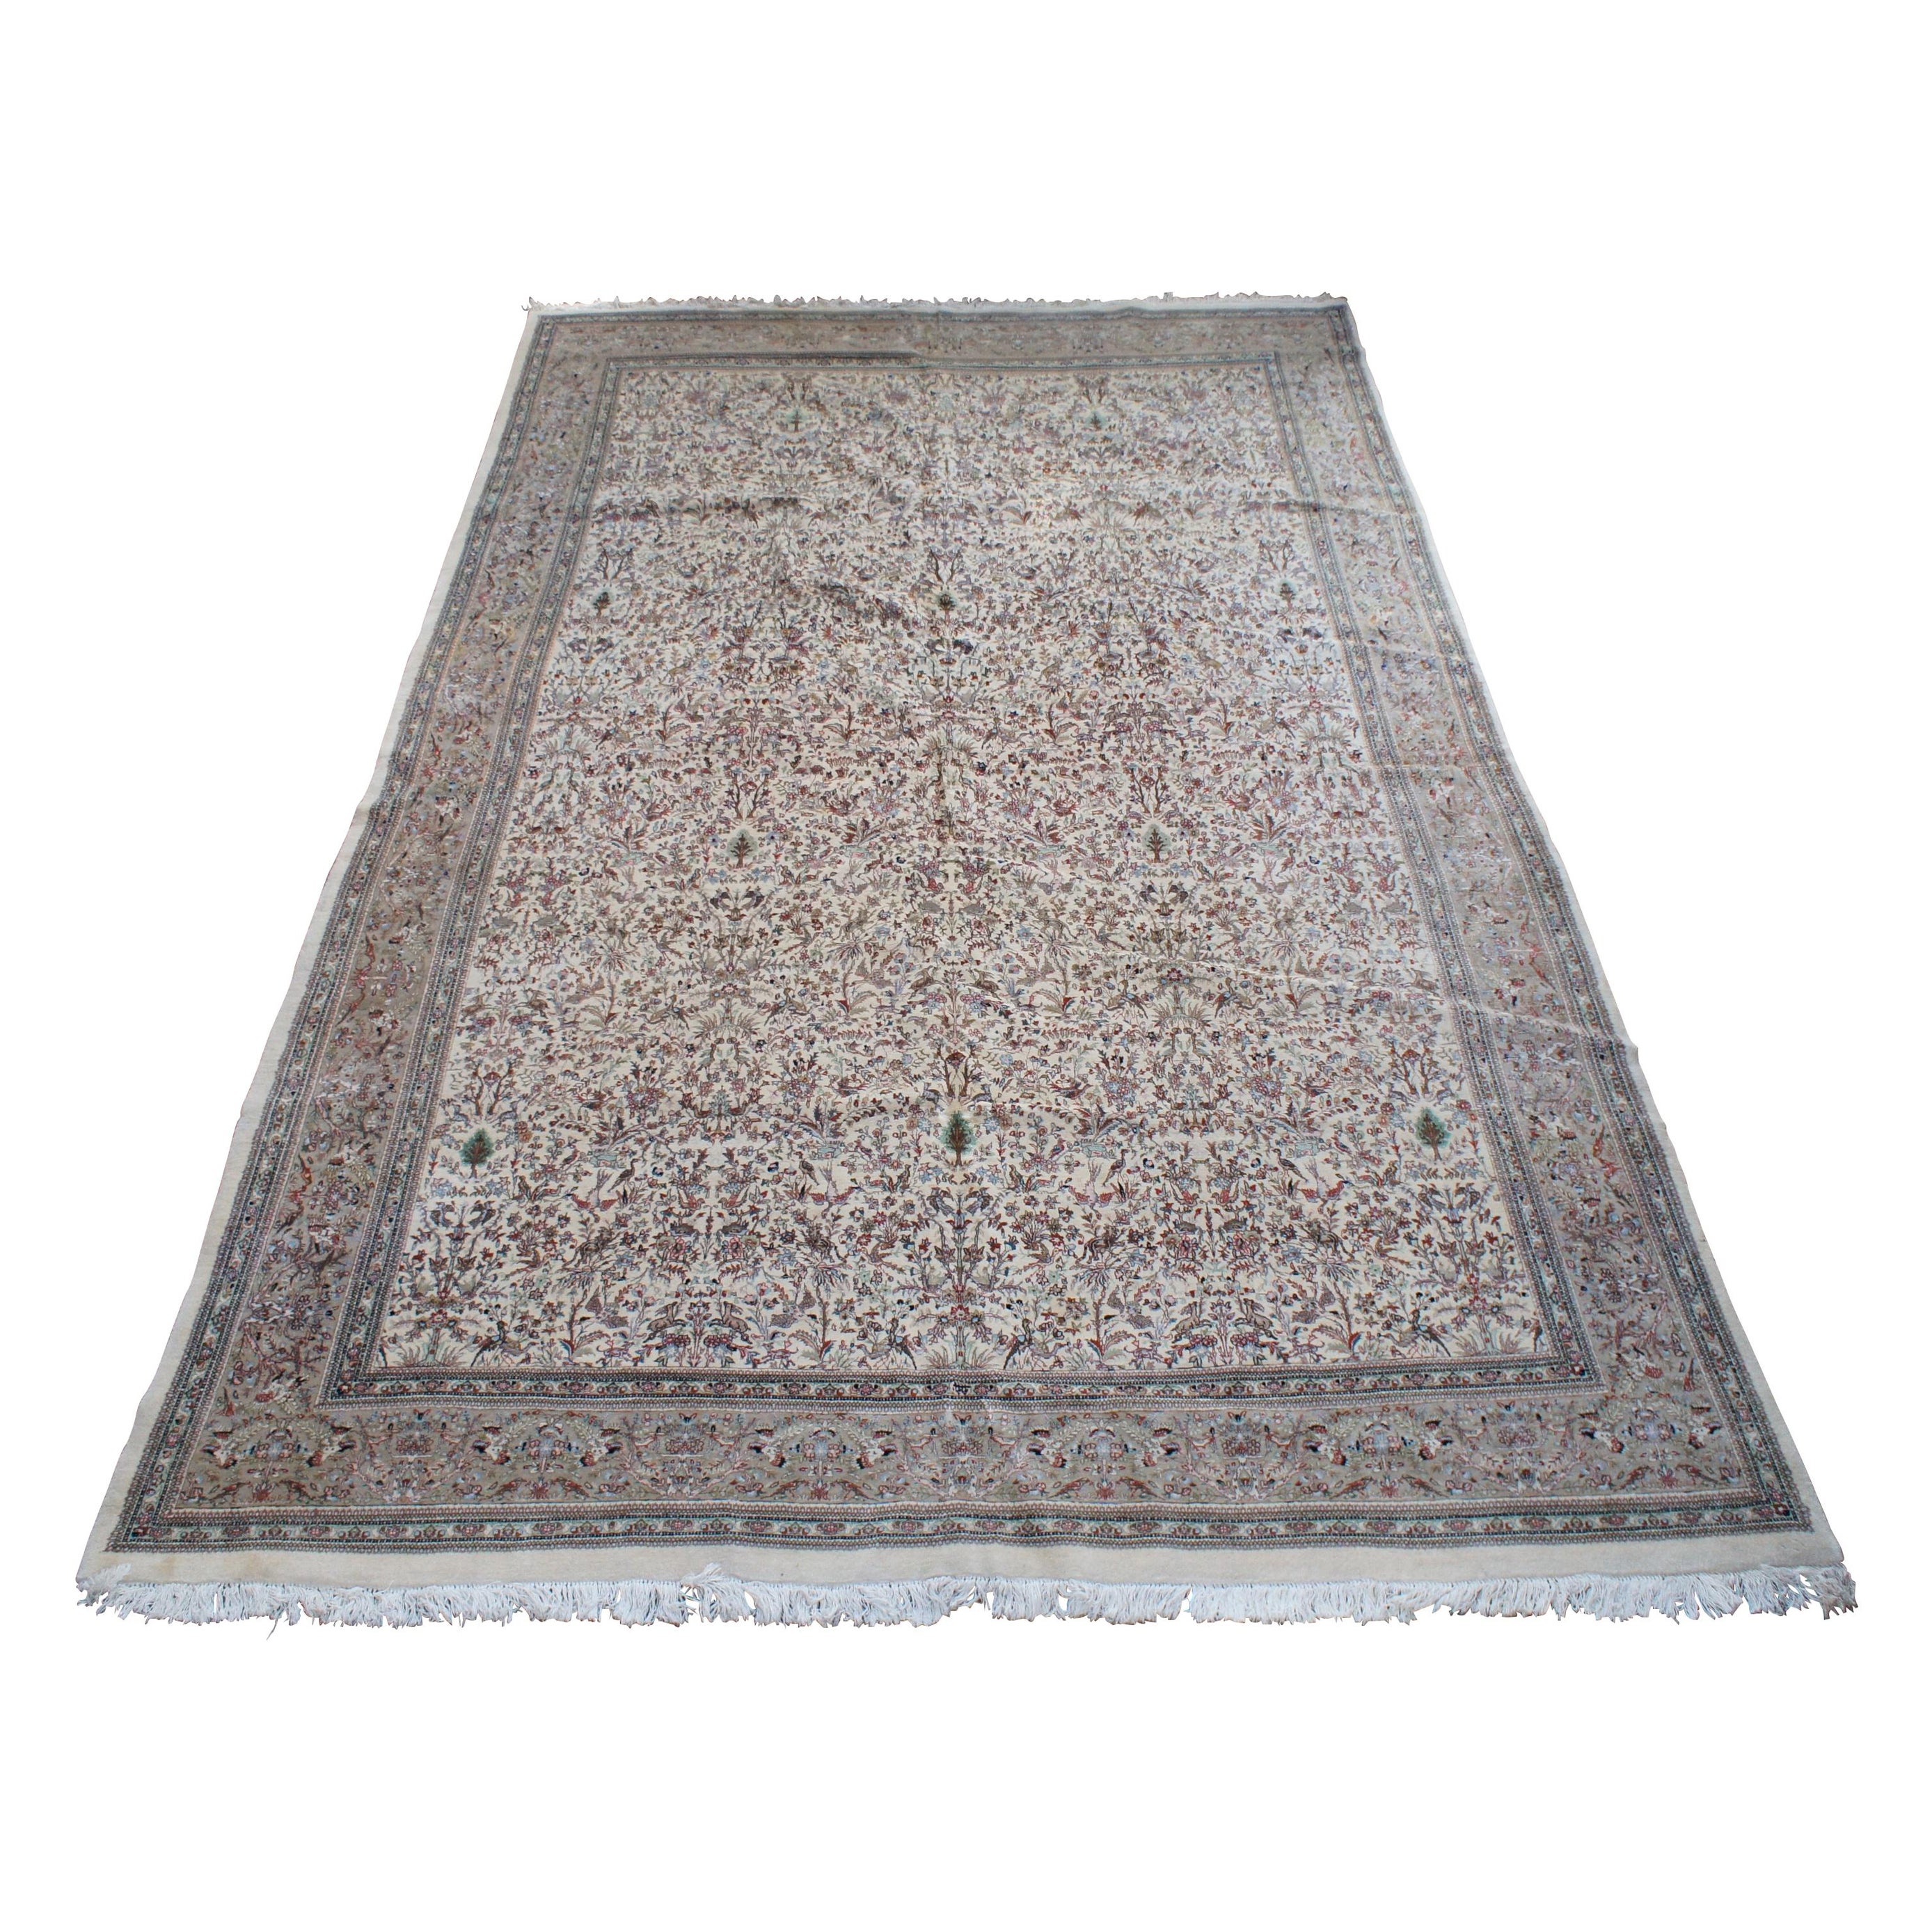 Monumental Persian Tabriz Hunting Animal Design Wool Area Rug Carpet 12' x 18' For Sale